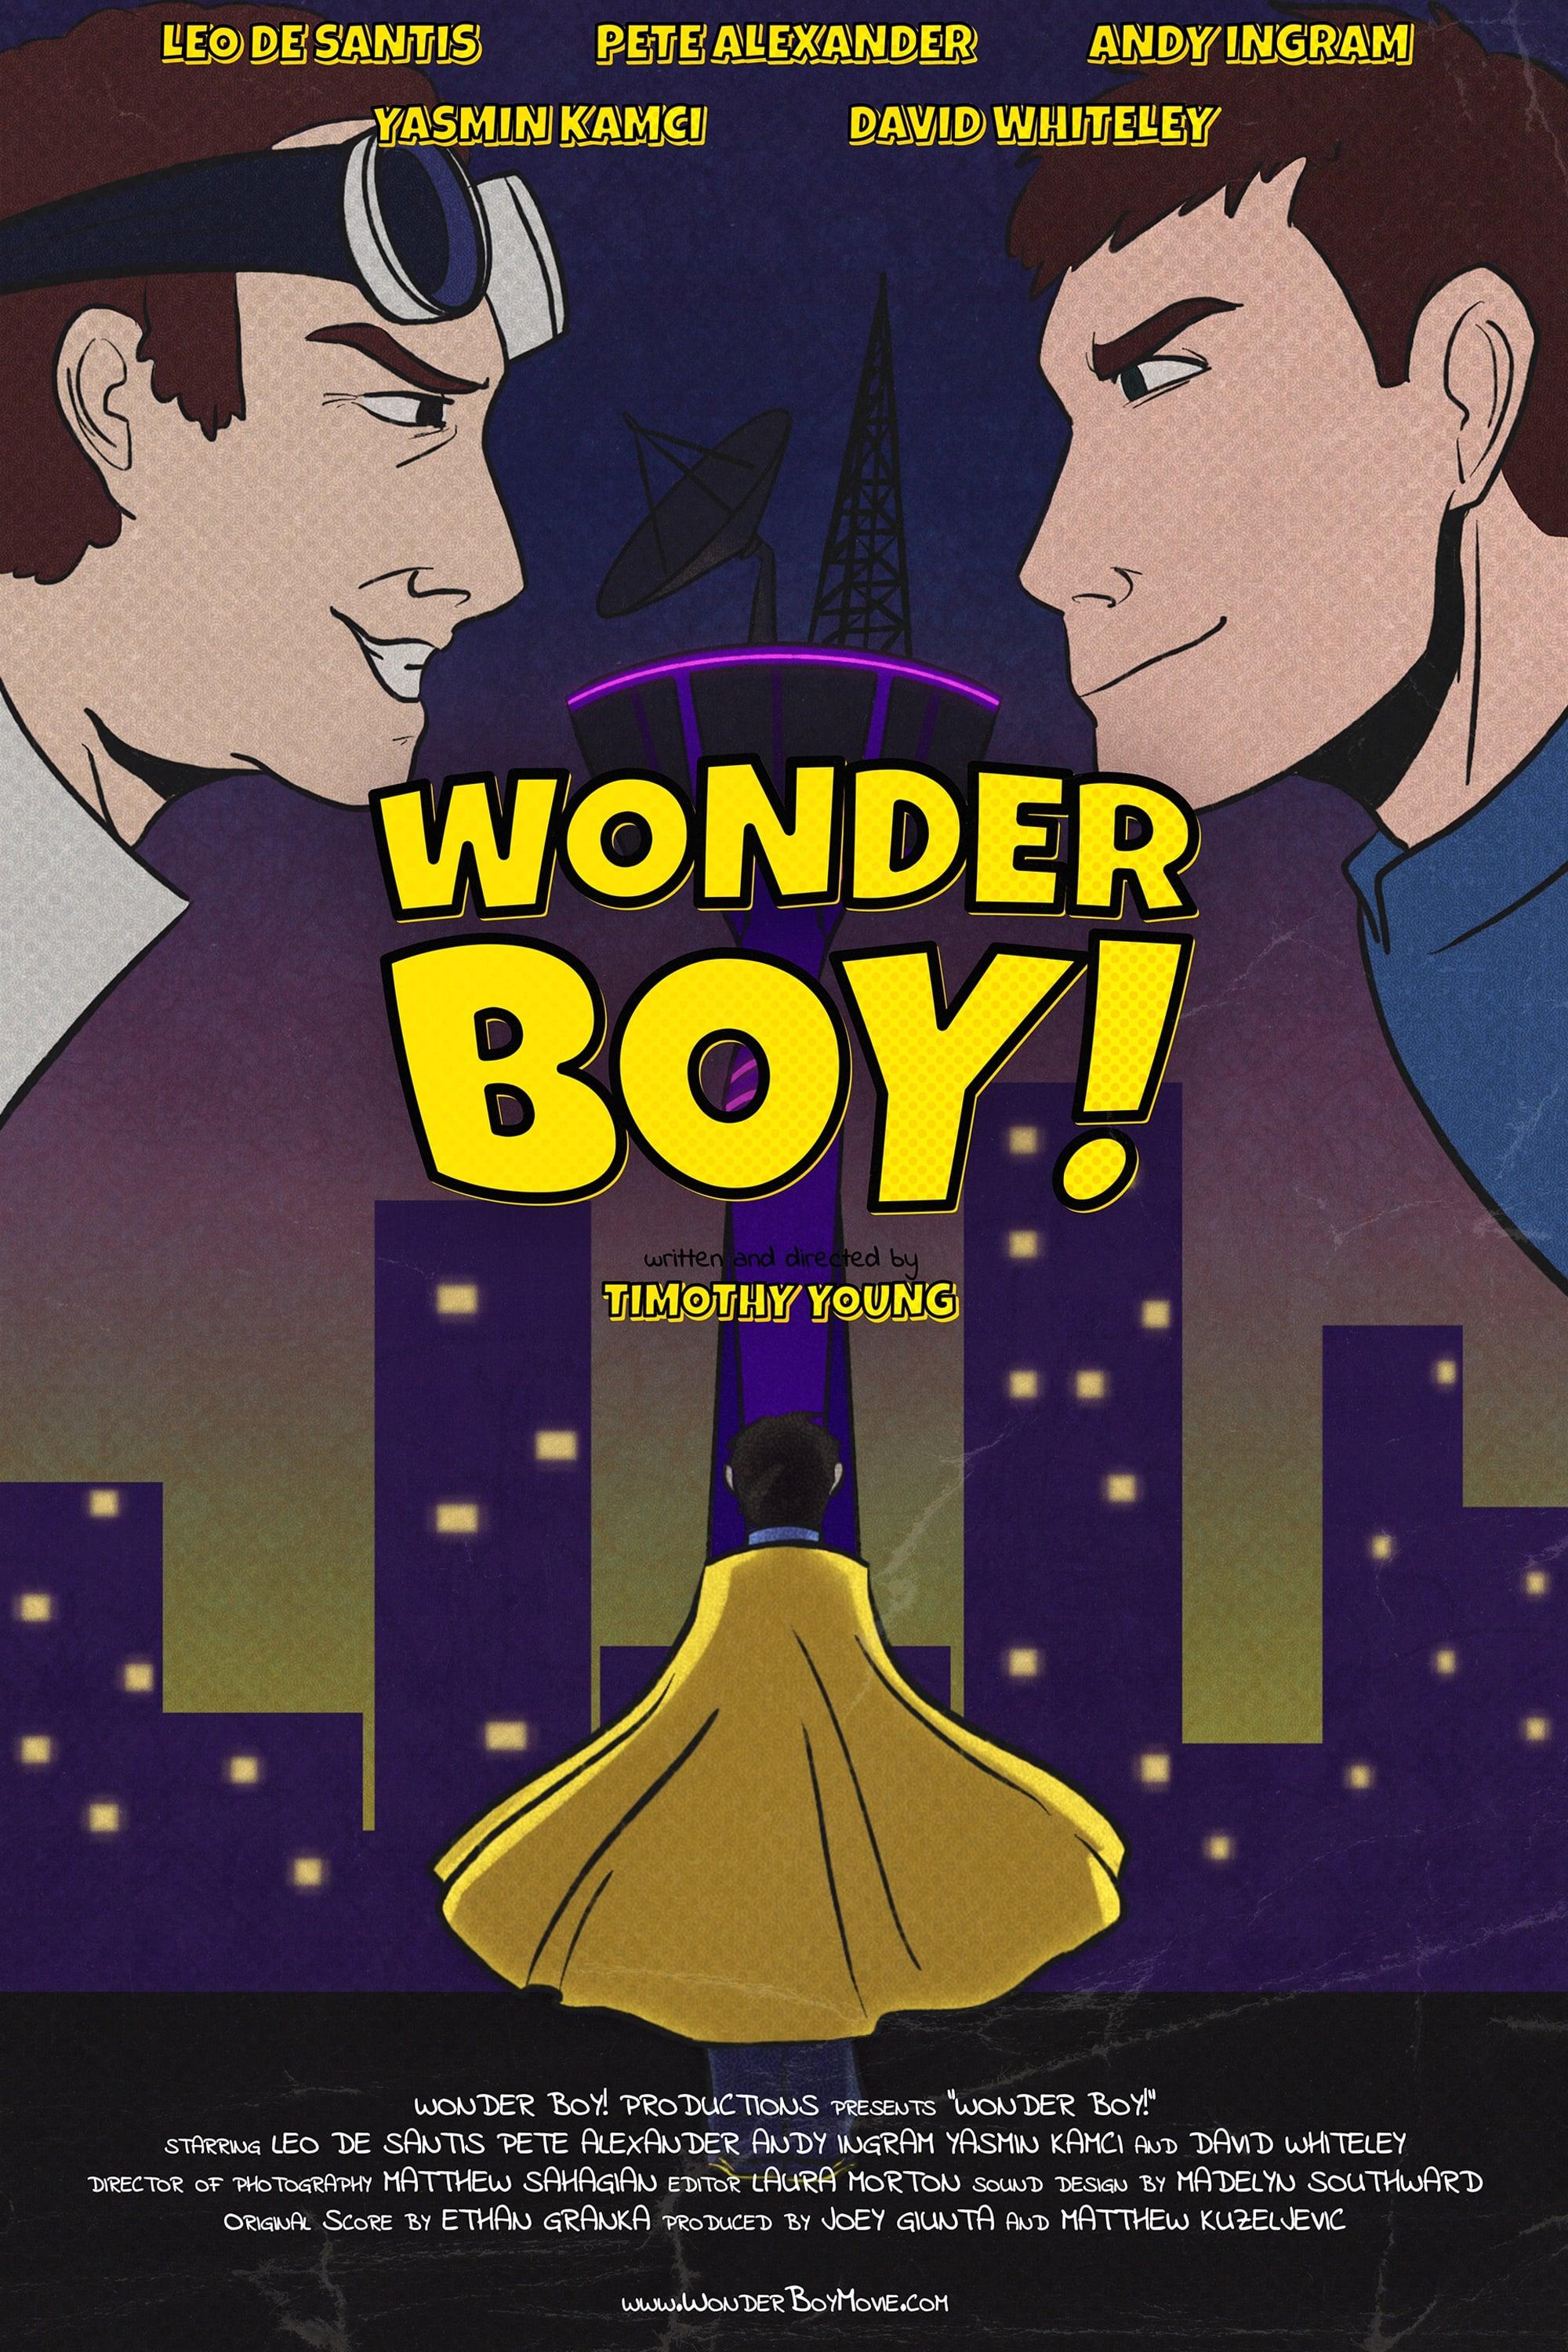 Wonder Boy! poster